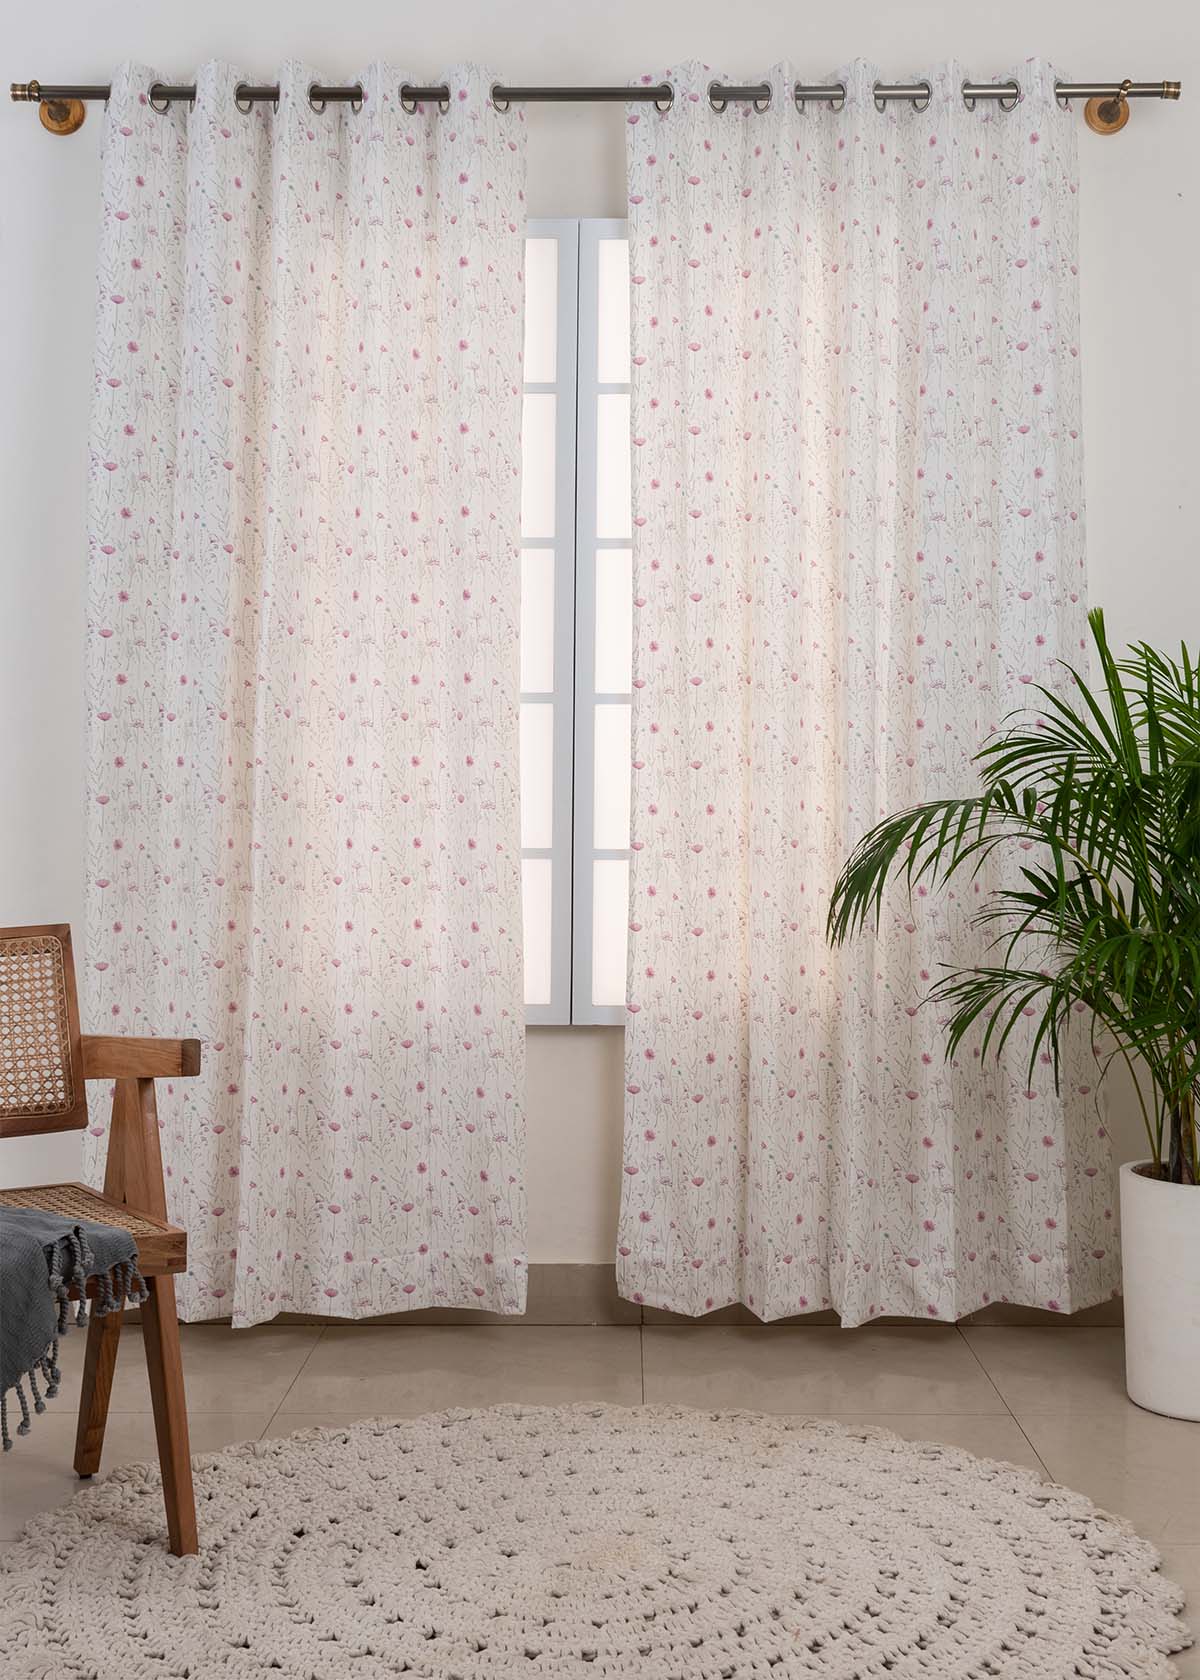 Drifting Dandelion 100% cotton floral curtain for kids room, living room - Room darkening - Lavender - Pack of 1